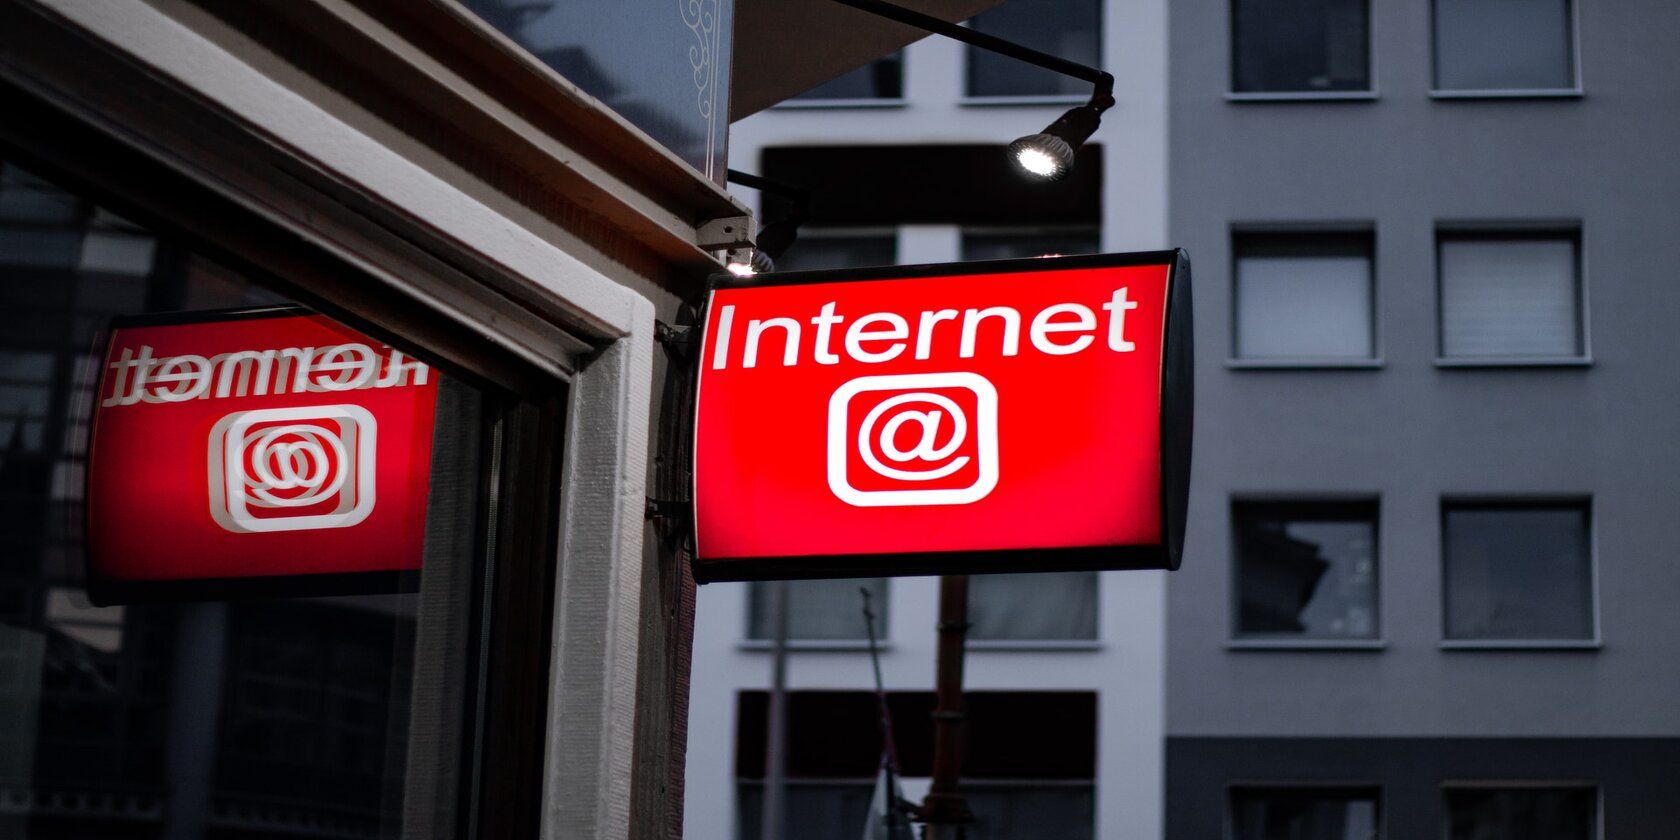 Internet written on signpost